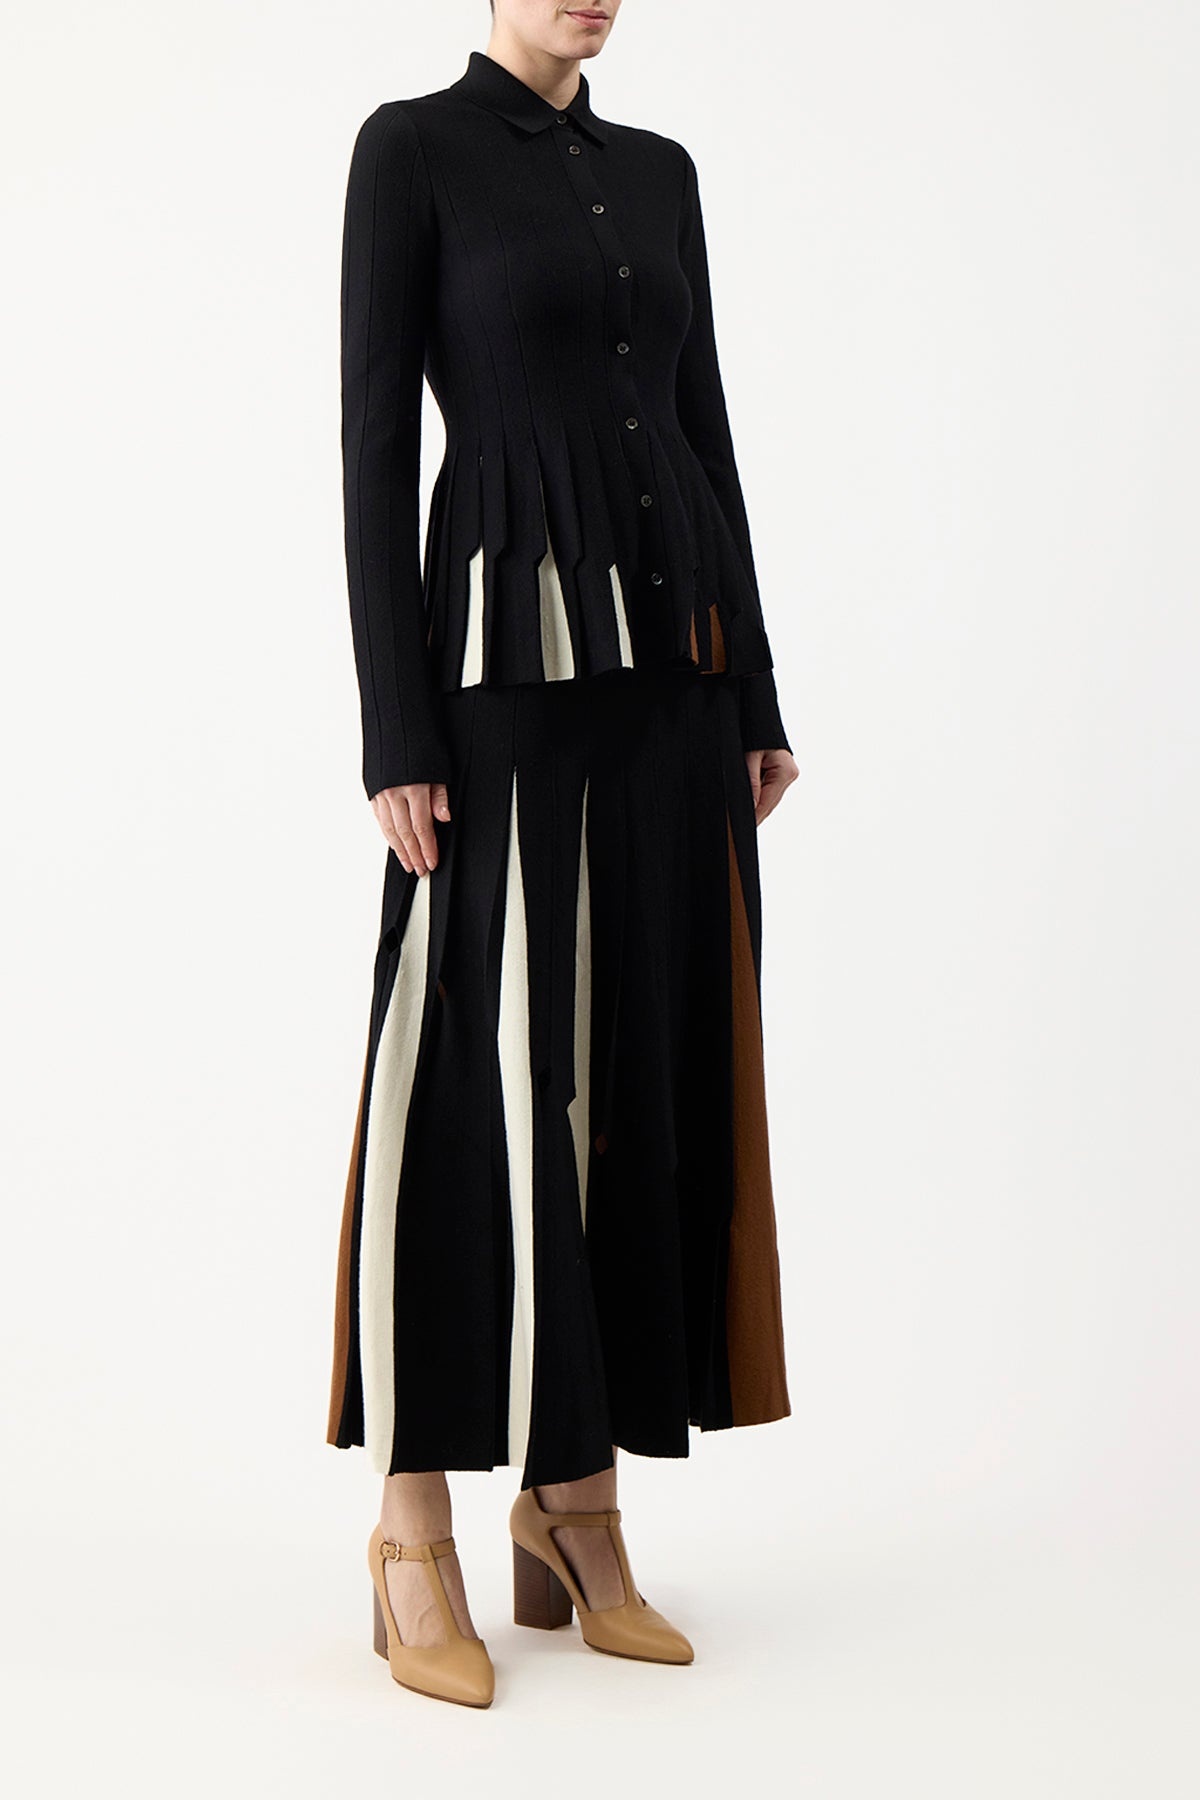 Olya Pleated Skirt in Merino Wool - 3